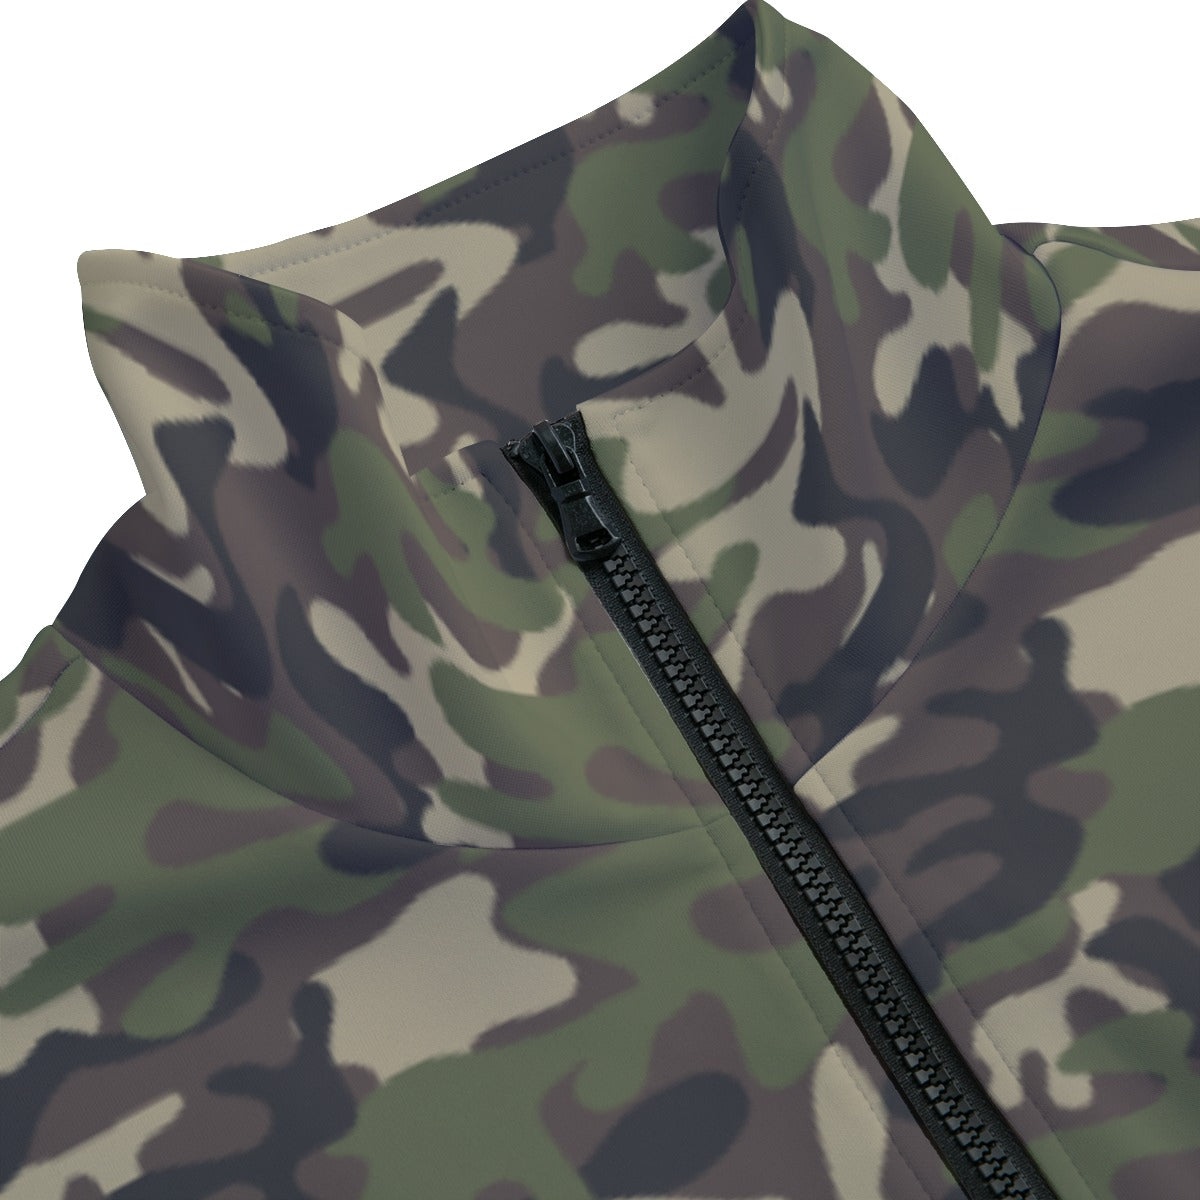 Camo Men Vest Stand-up Collar, Green Camouflage Army Guys Menswear Sweater Golf Casual Travel Light Lightweight Designer Zipper Starcove Fashion